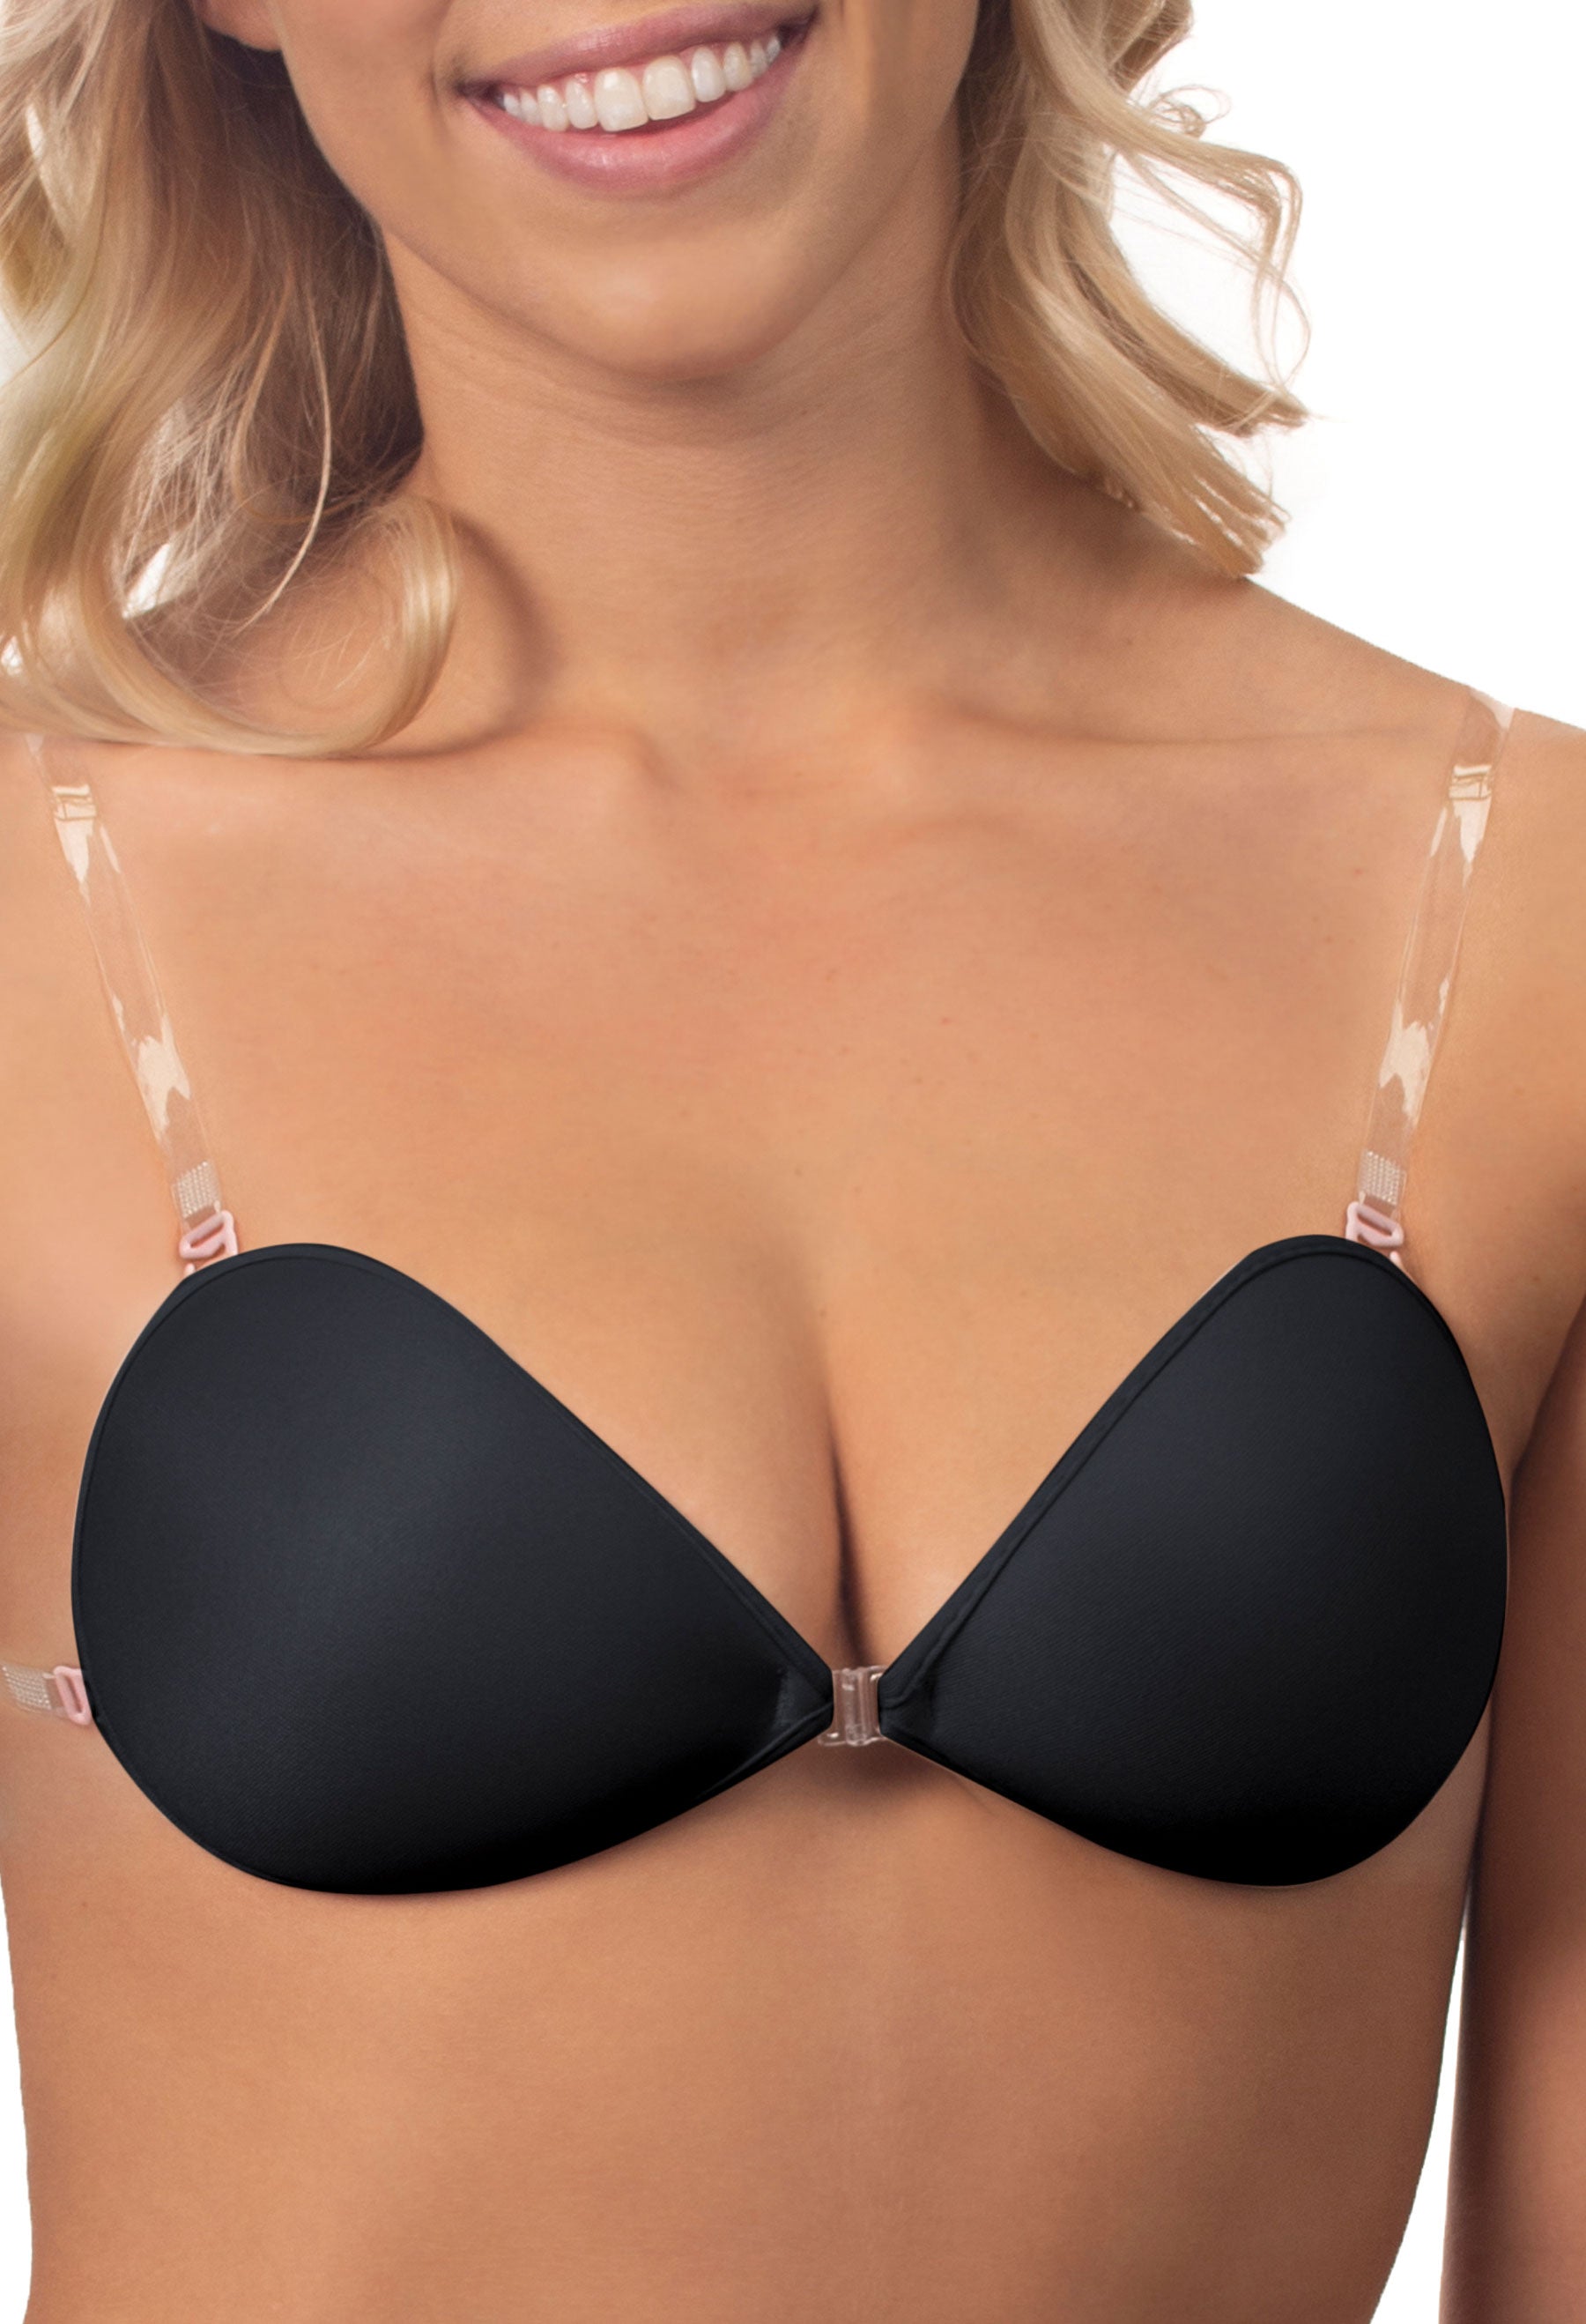 Wholesale stick bra big bust For Supportive Underwear 